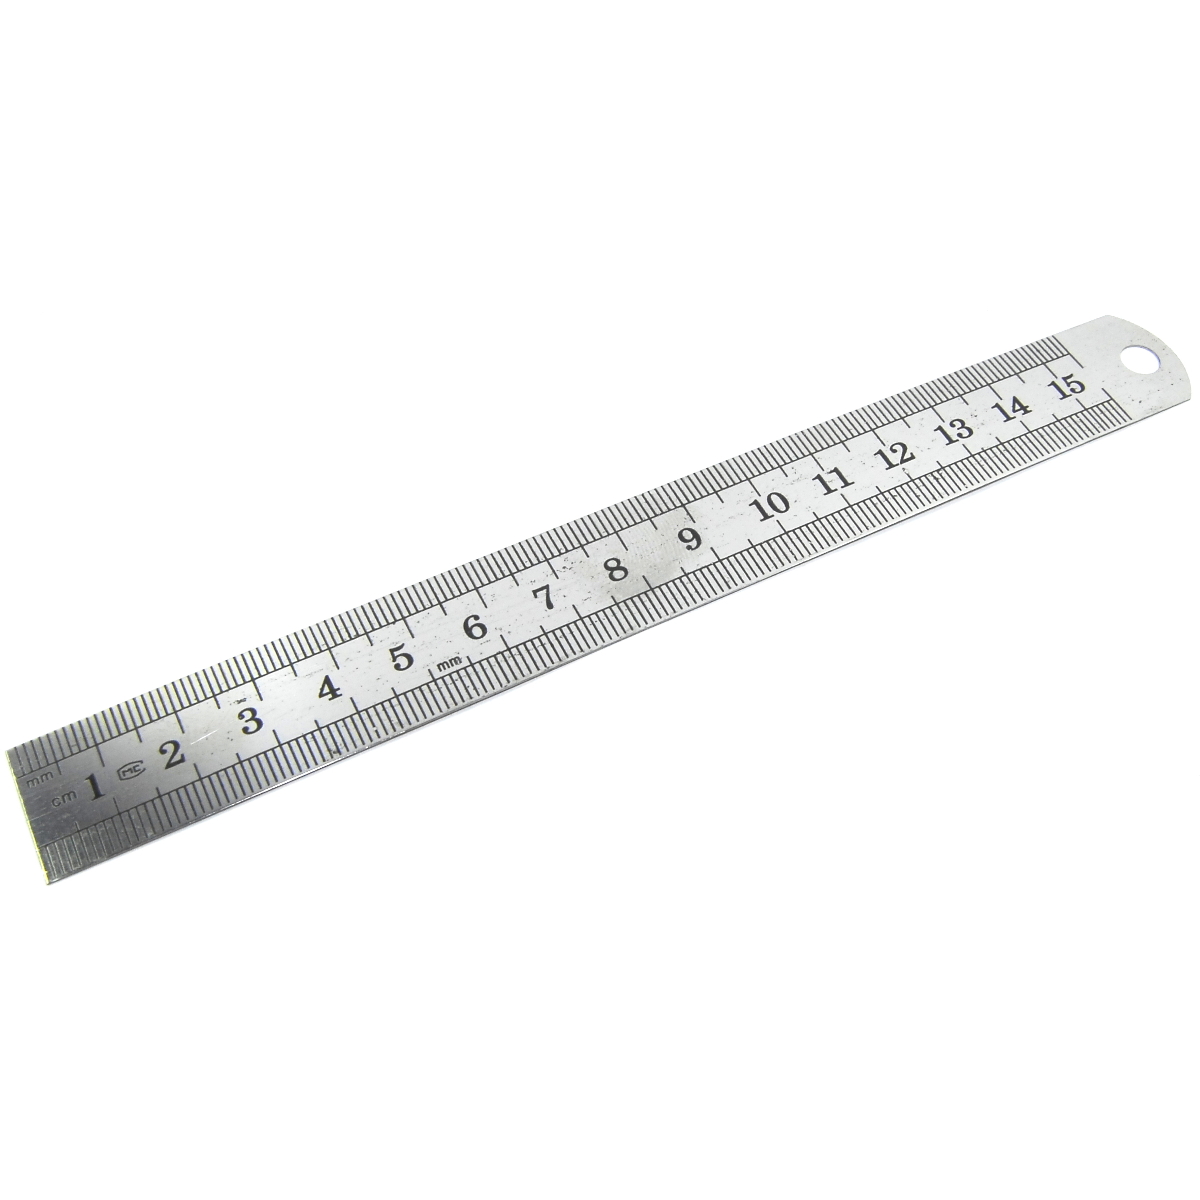 Steel Ruler Image 1